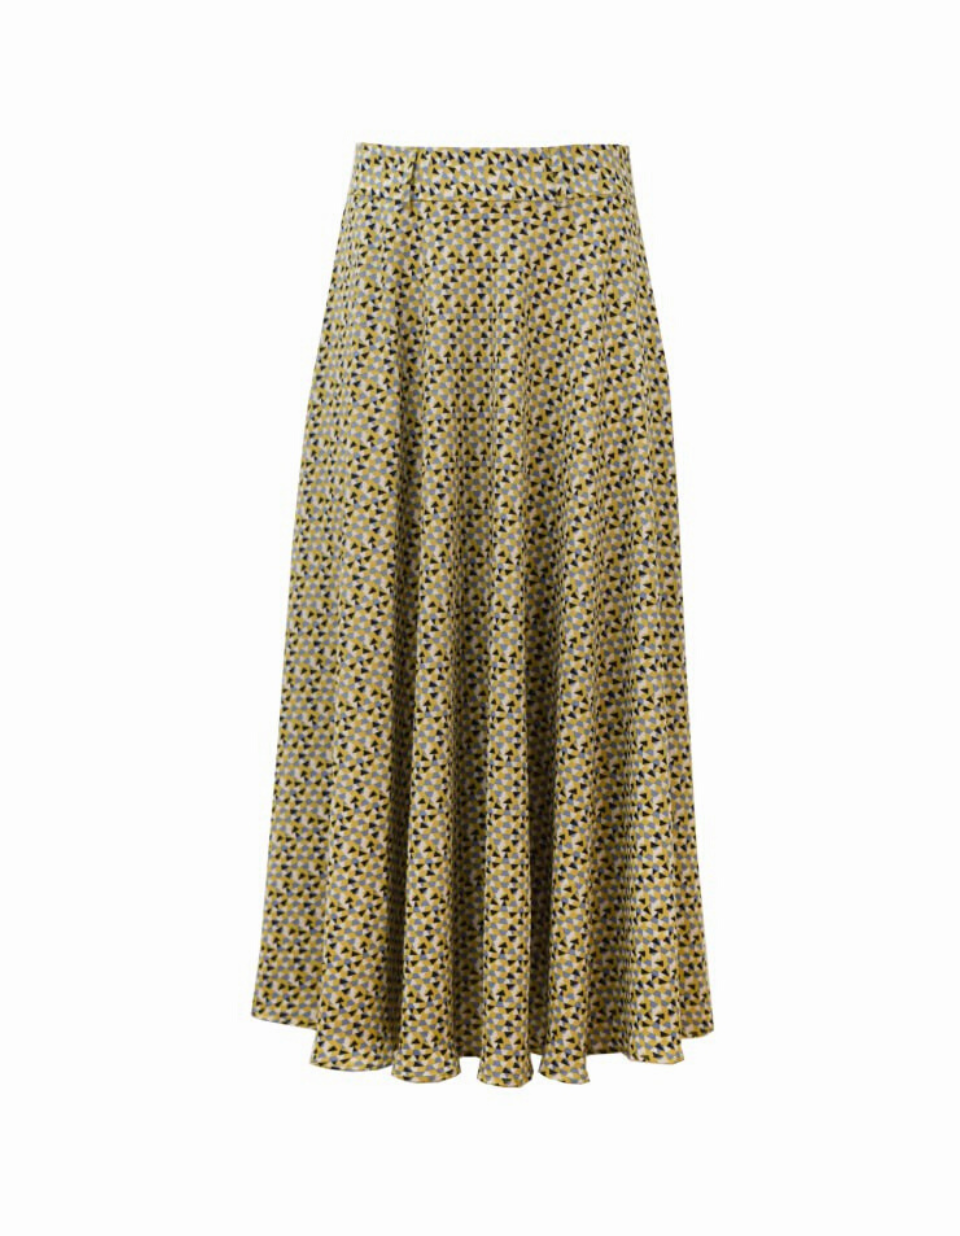 Full Skirt (Cirtus Geometric)